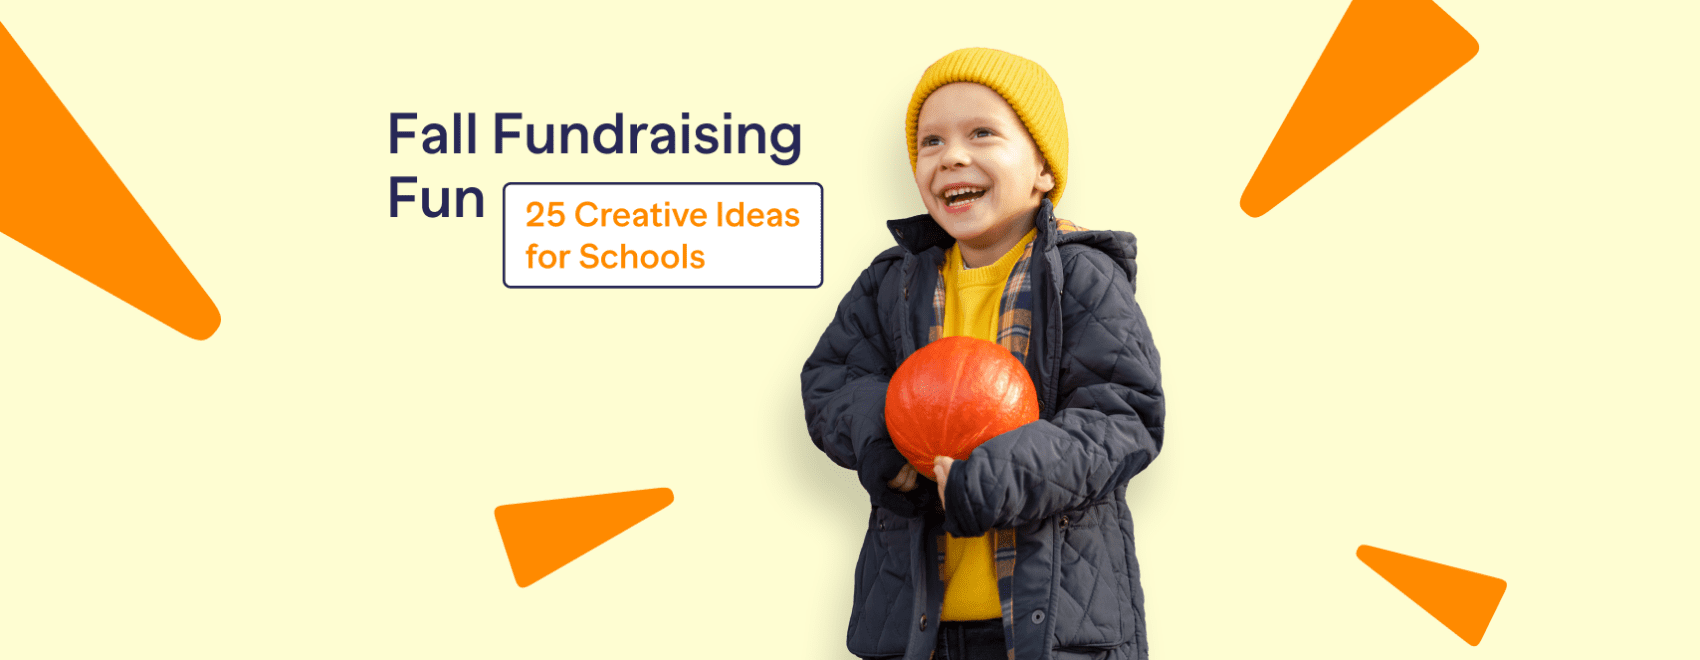 Fall Fundraising Fun: 25 Creative Ideas for Schools